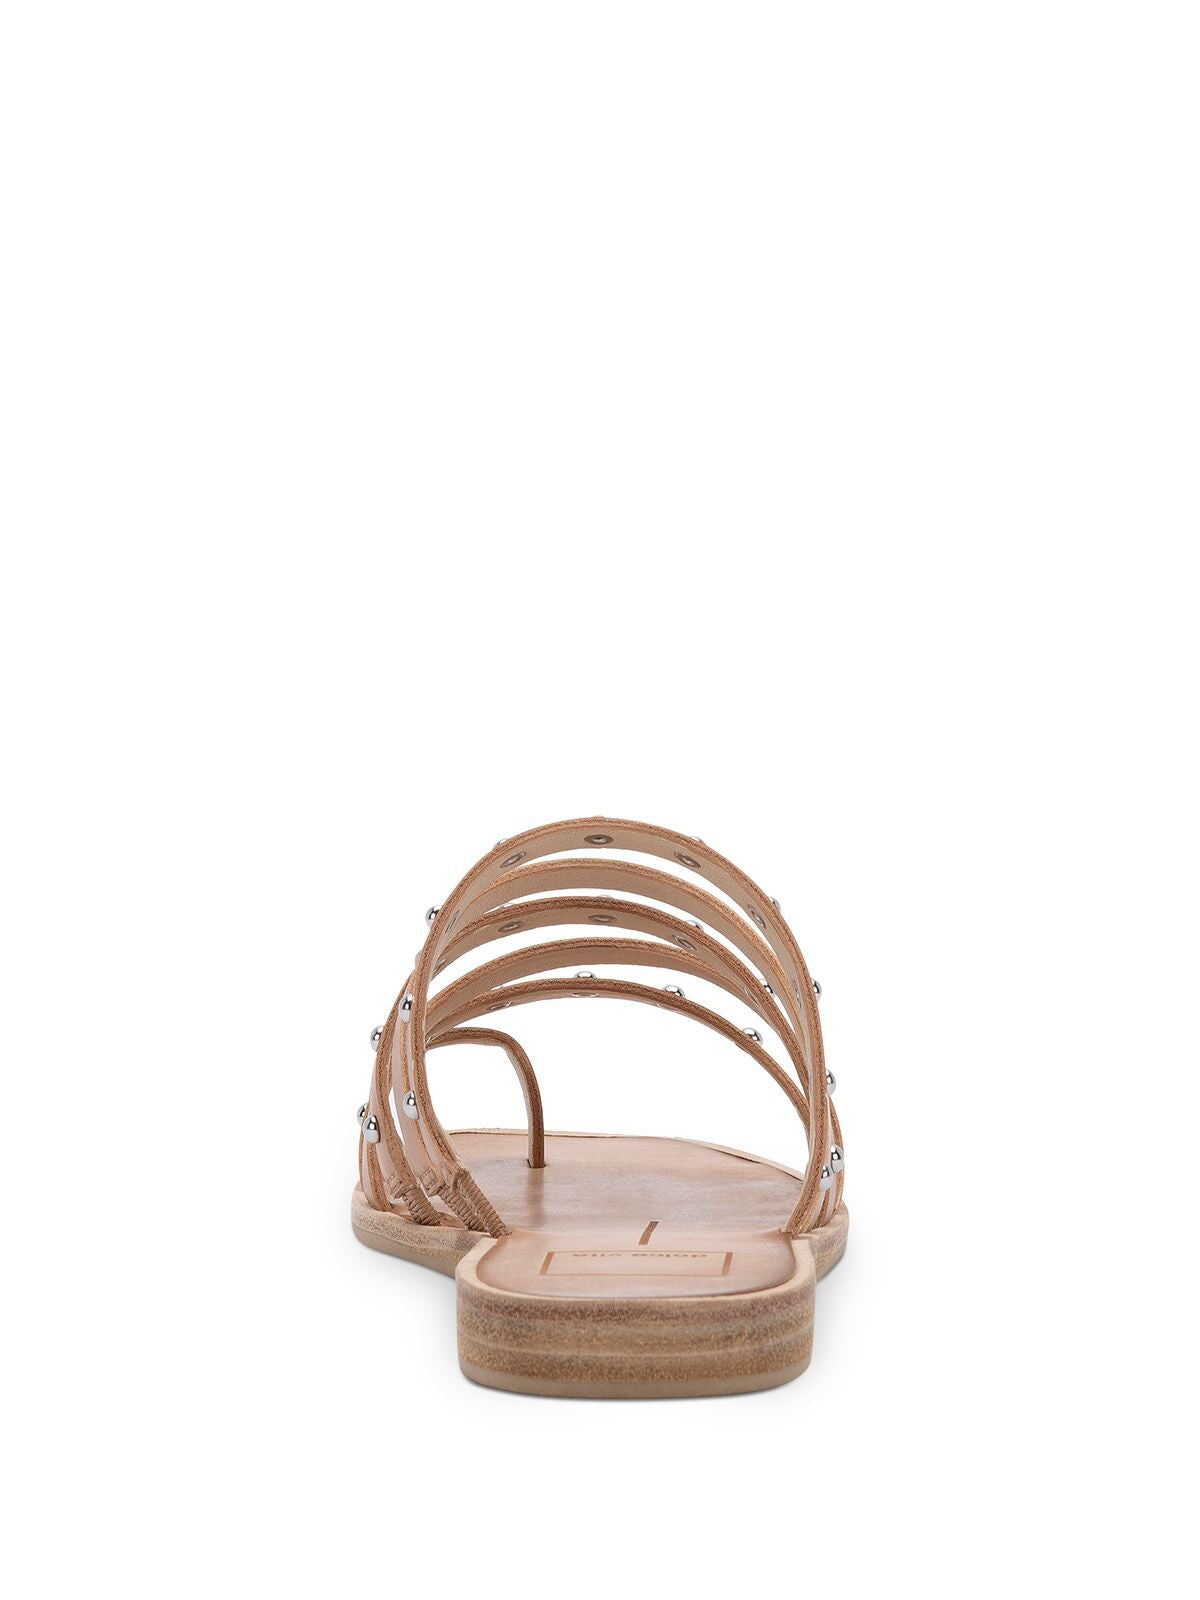 DOLCE VITA Womens Beige Toe-Loop Strappy Studded Kaylee Square Toe Block Heel Slip On Slide Sandals Shoes 9